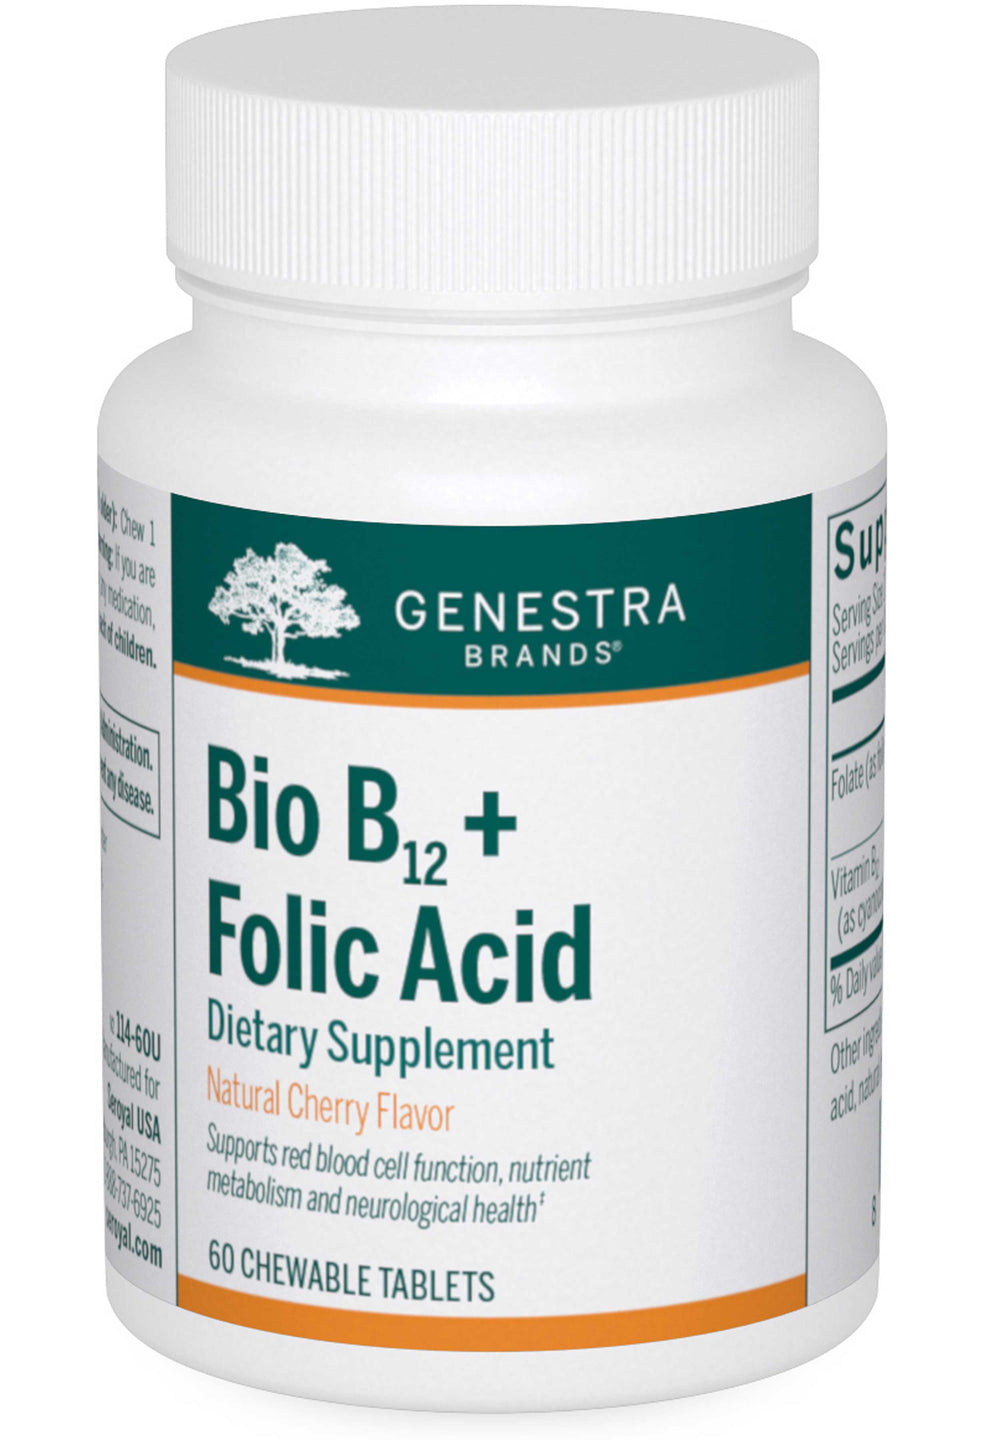 Genestra Brands Bio B12 Folic Acid Supplement First